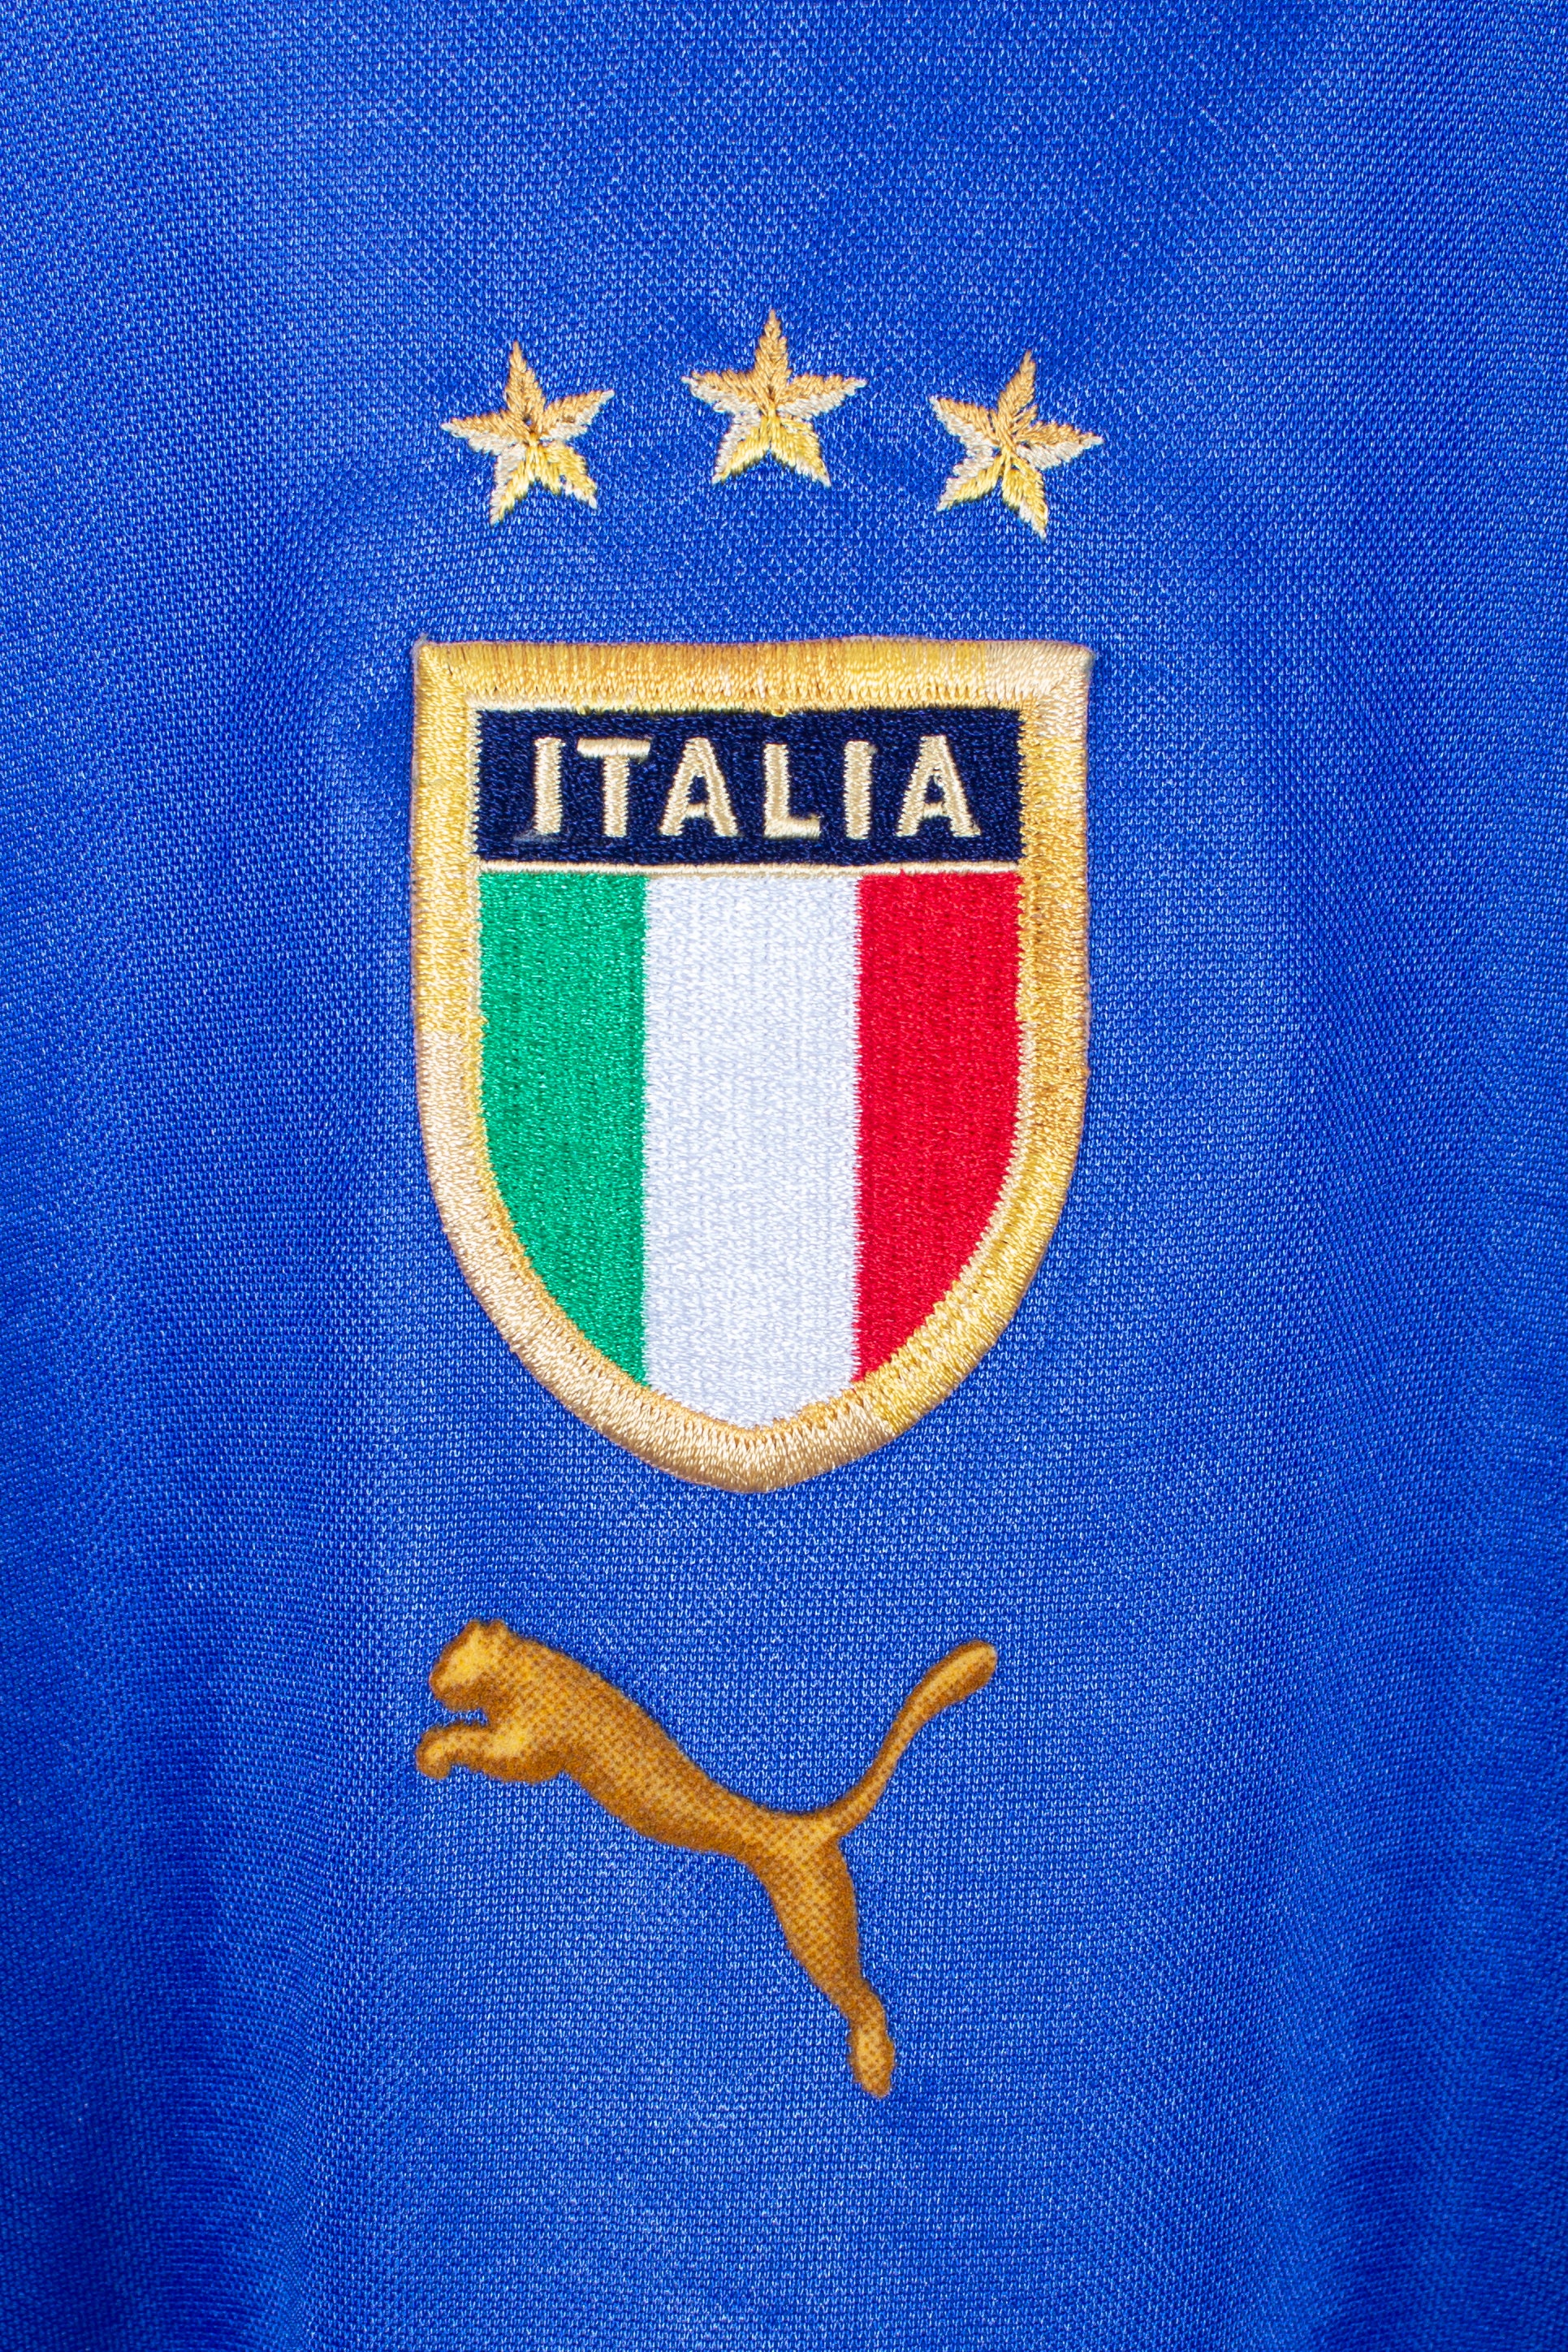 Italy 2004 Home Shirt